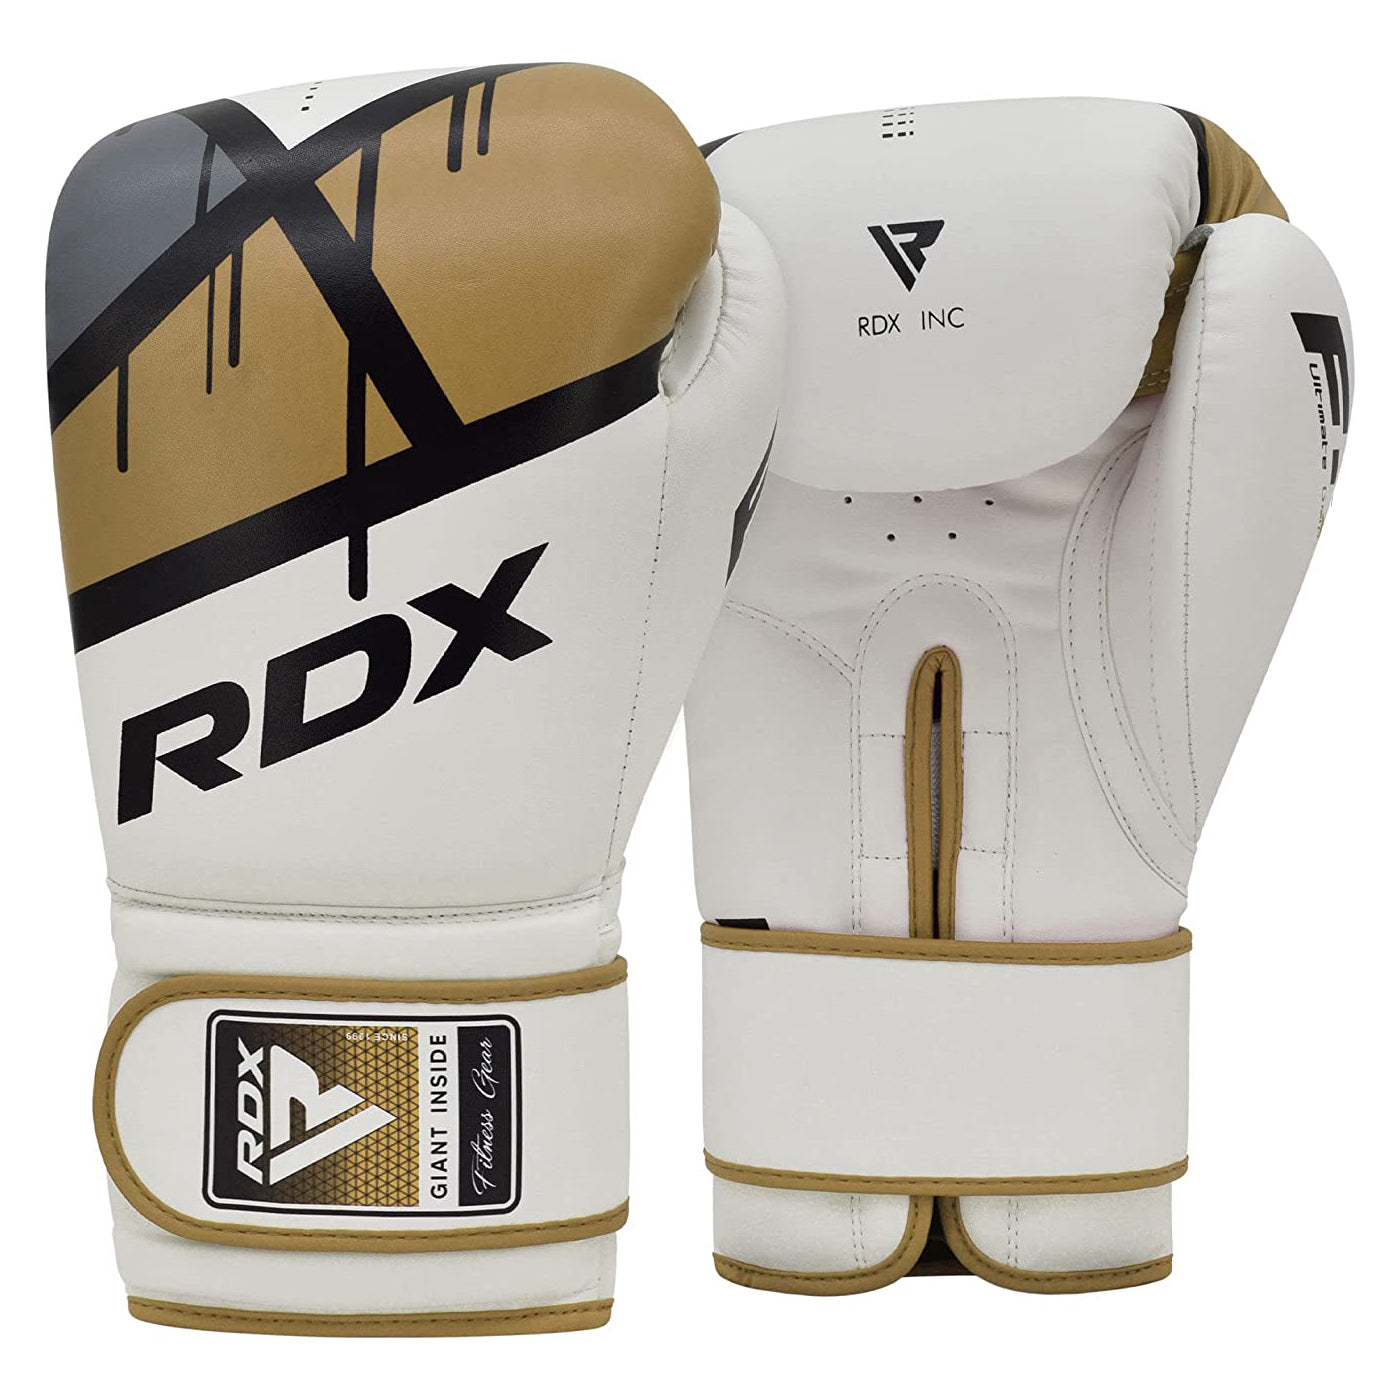 RDX F7 EGO MMA, BJJ, Muay Thai, Kickboxing, Training Boxing Gloves - GOLDEN - 12OZ - Pro-Distributing